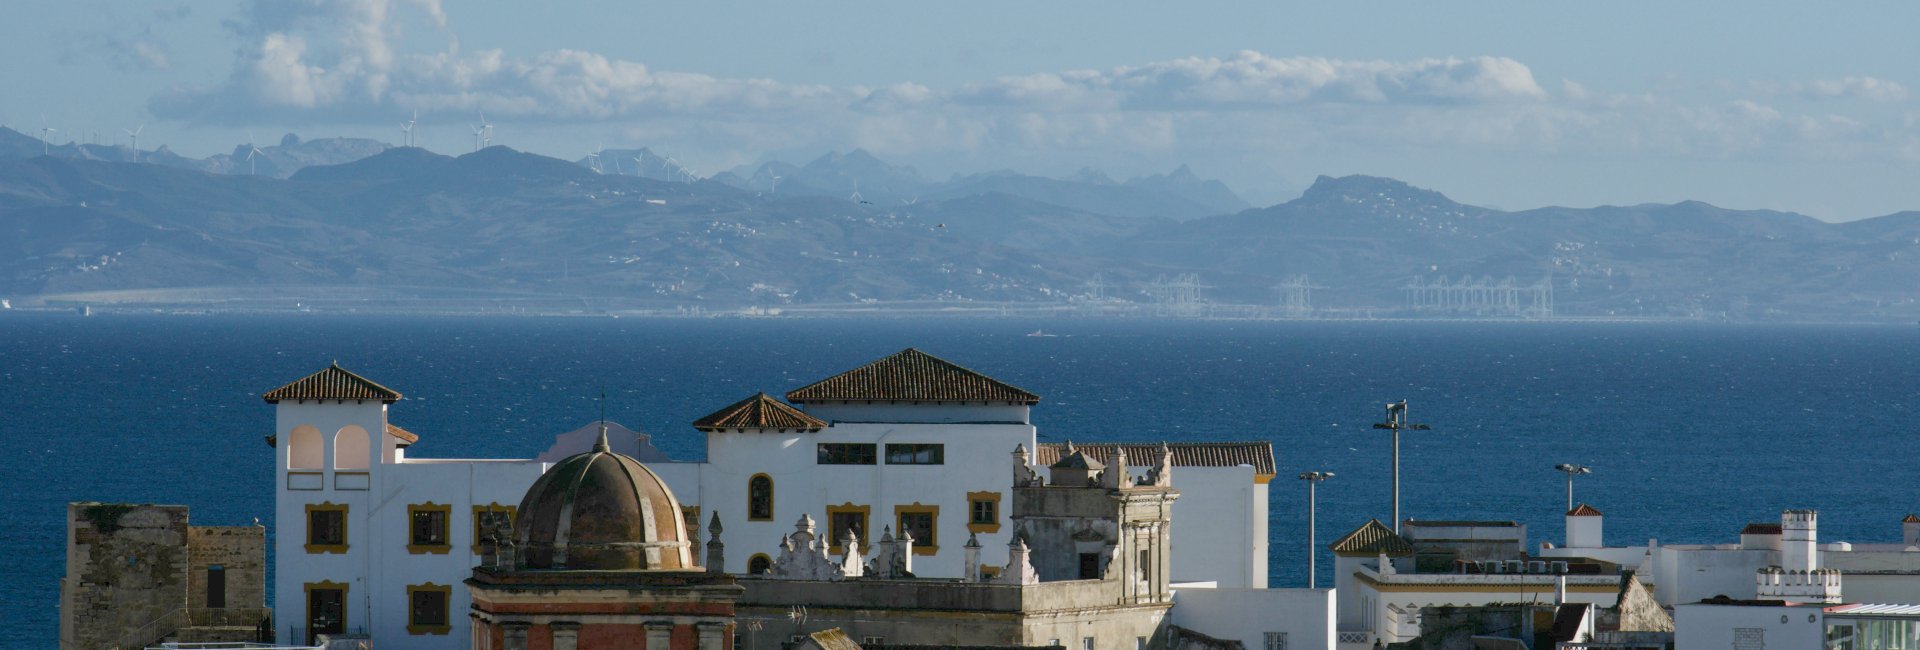 MIksang retraite in Zuid-Spanje, Tarifa, Miksang in Marokko, Miksang retreat Spain, Miksang Fotografie